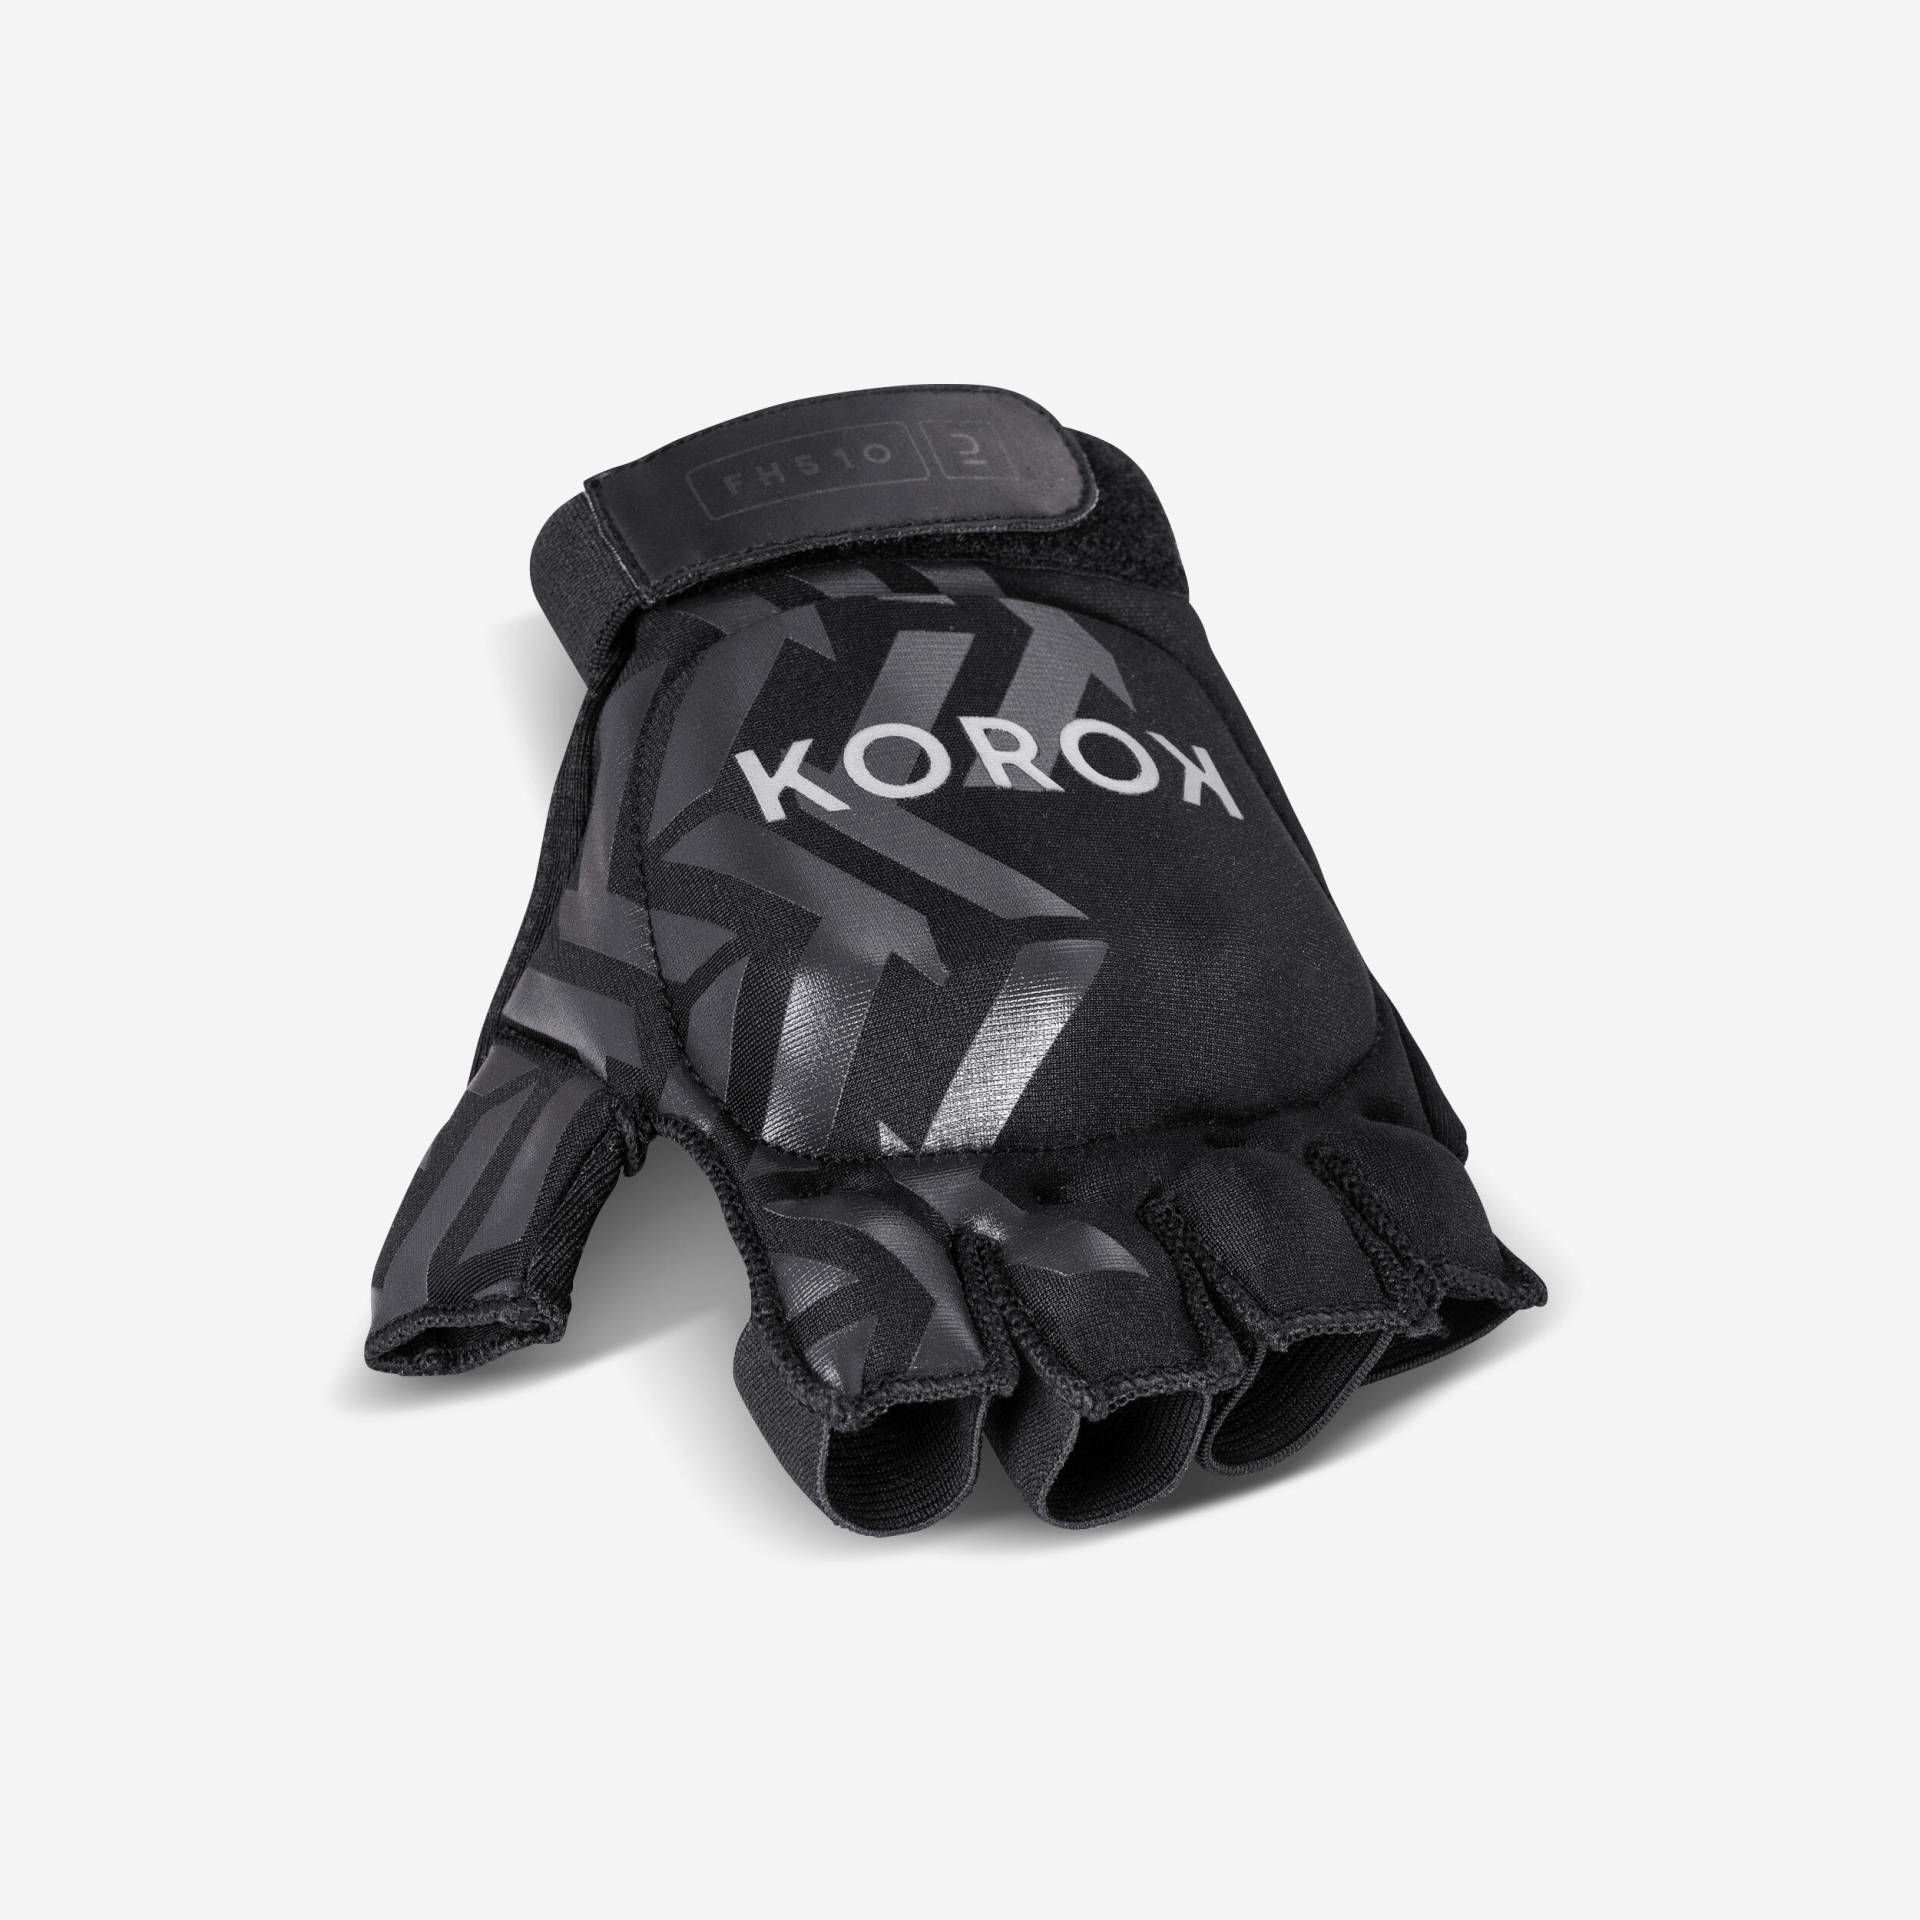 Feldhockey Handschuhe 1-Fingerglied - FG510 schwarz/grau von KOROK